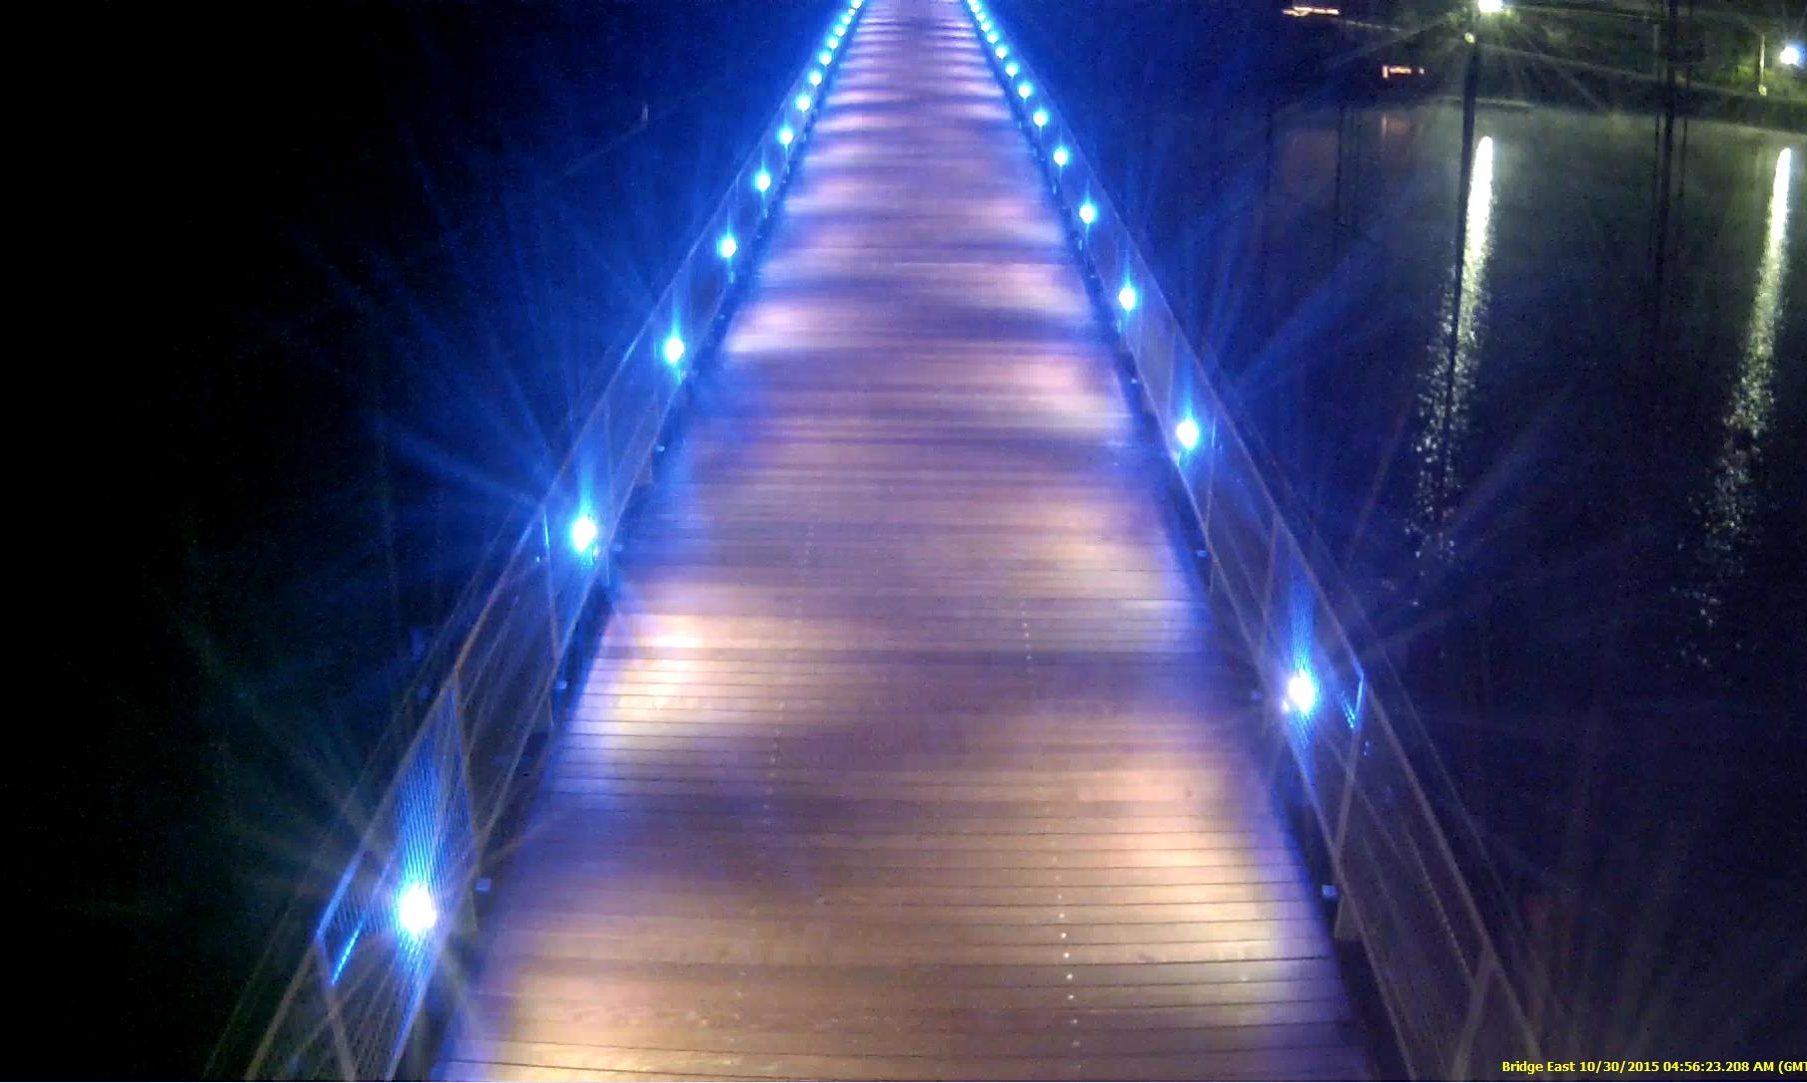 Joe Dice Suspension Bridge